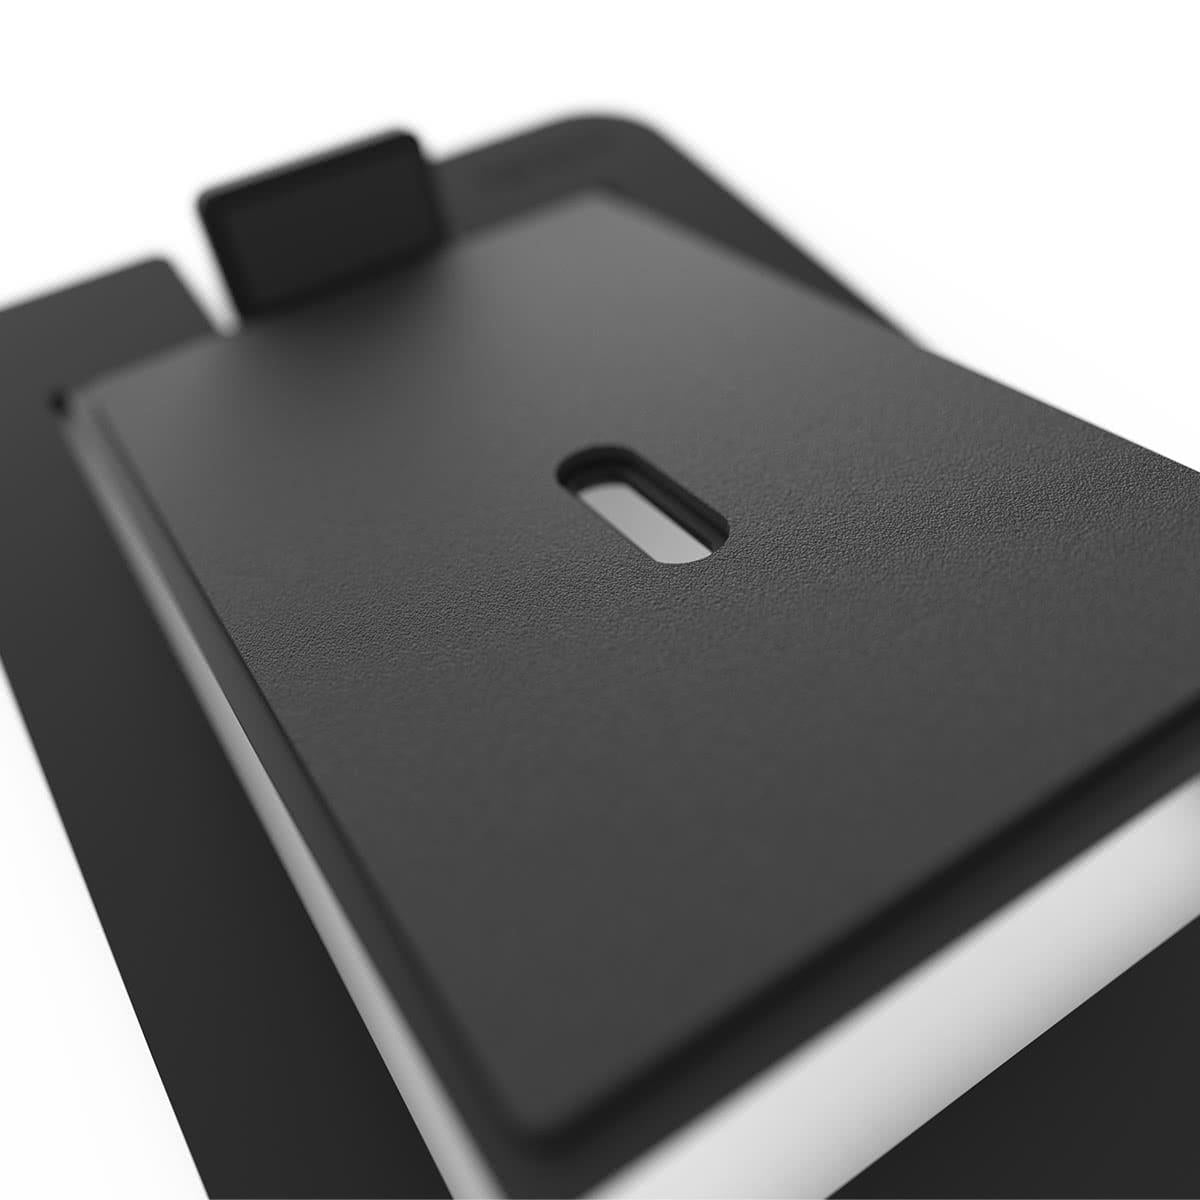 Kanto TUK Premium Powered Speakers - Pair with S6 Desktop Speaker Stands (Black)